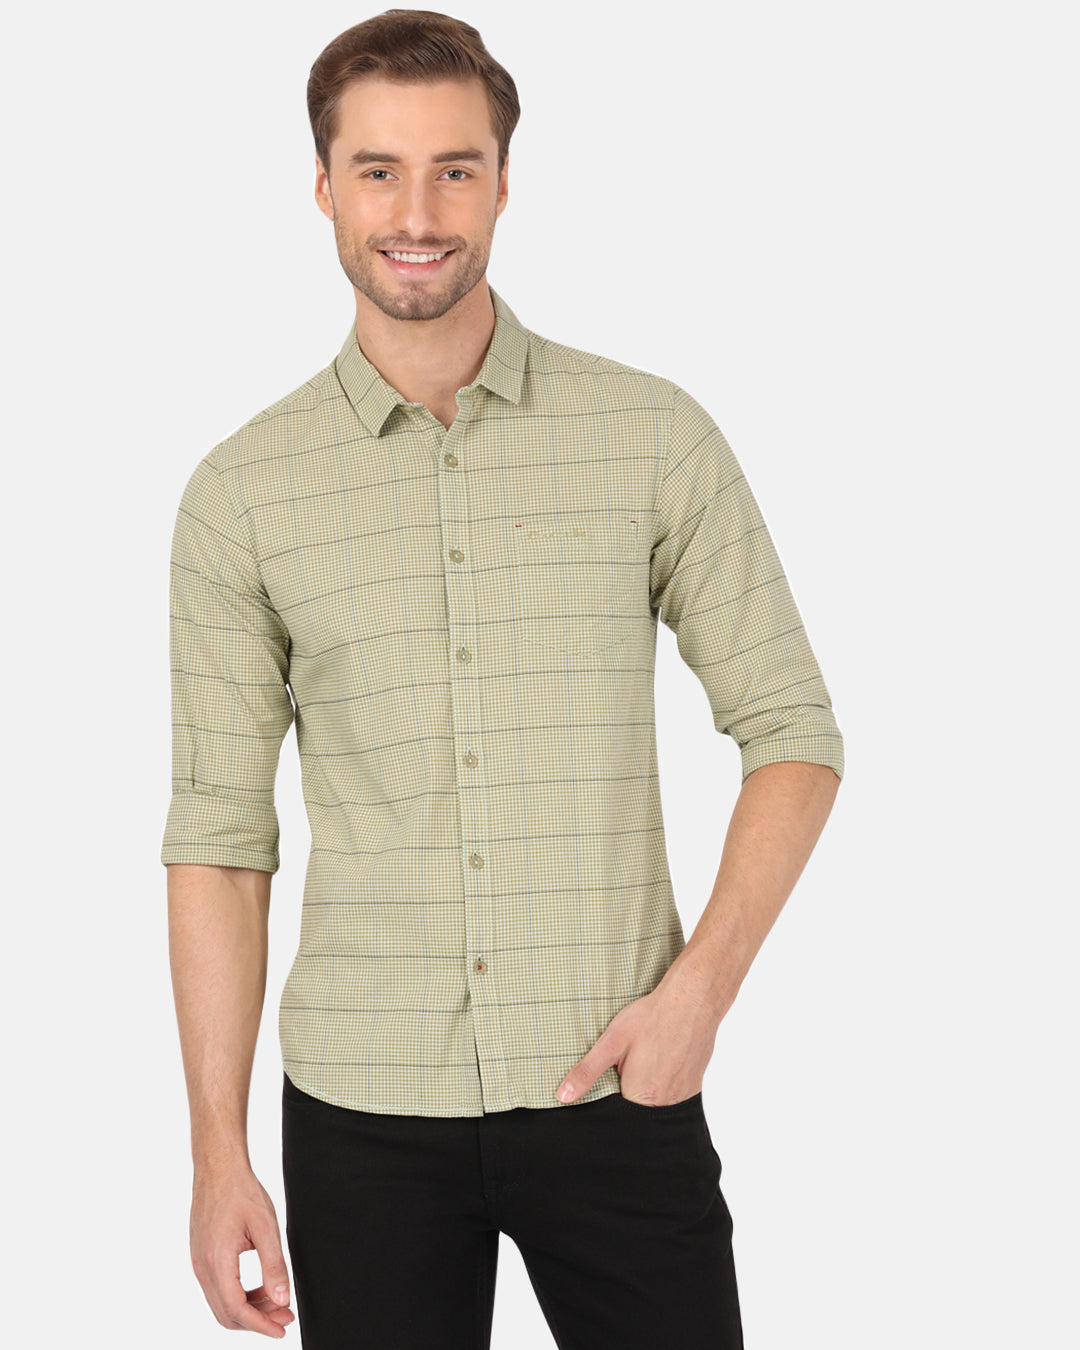 Crocodile Casual Full Sleeve Slim Fit Green Shirt for Men